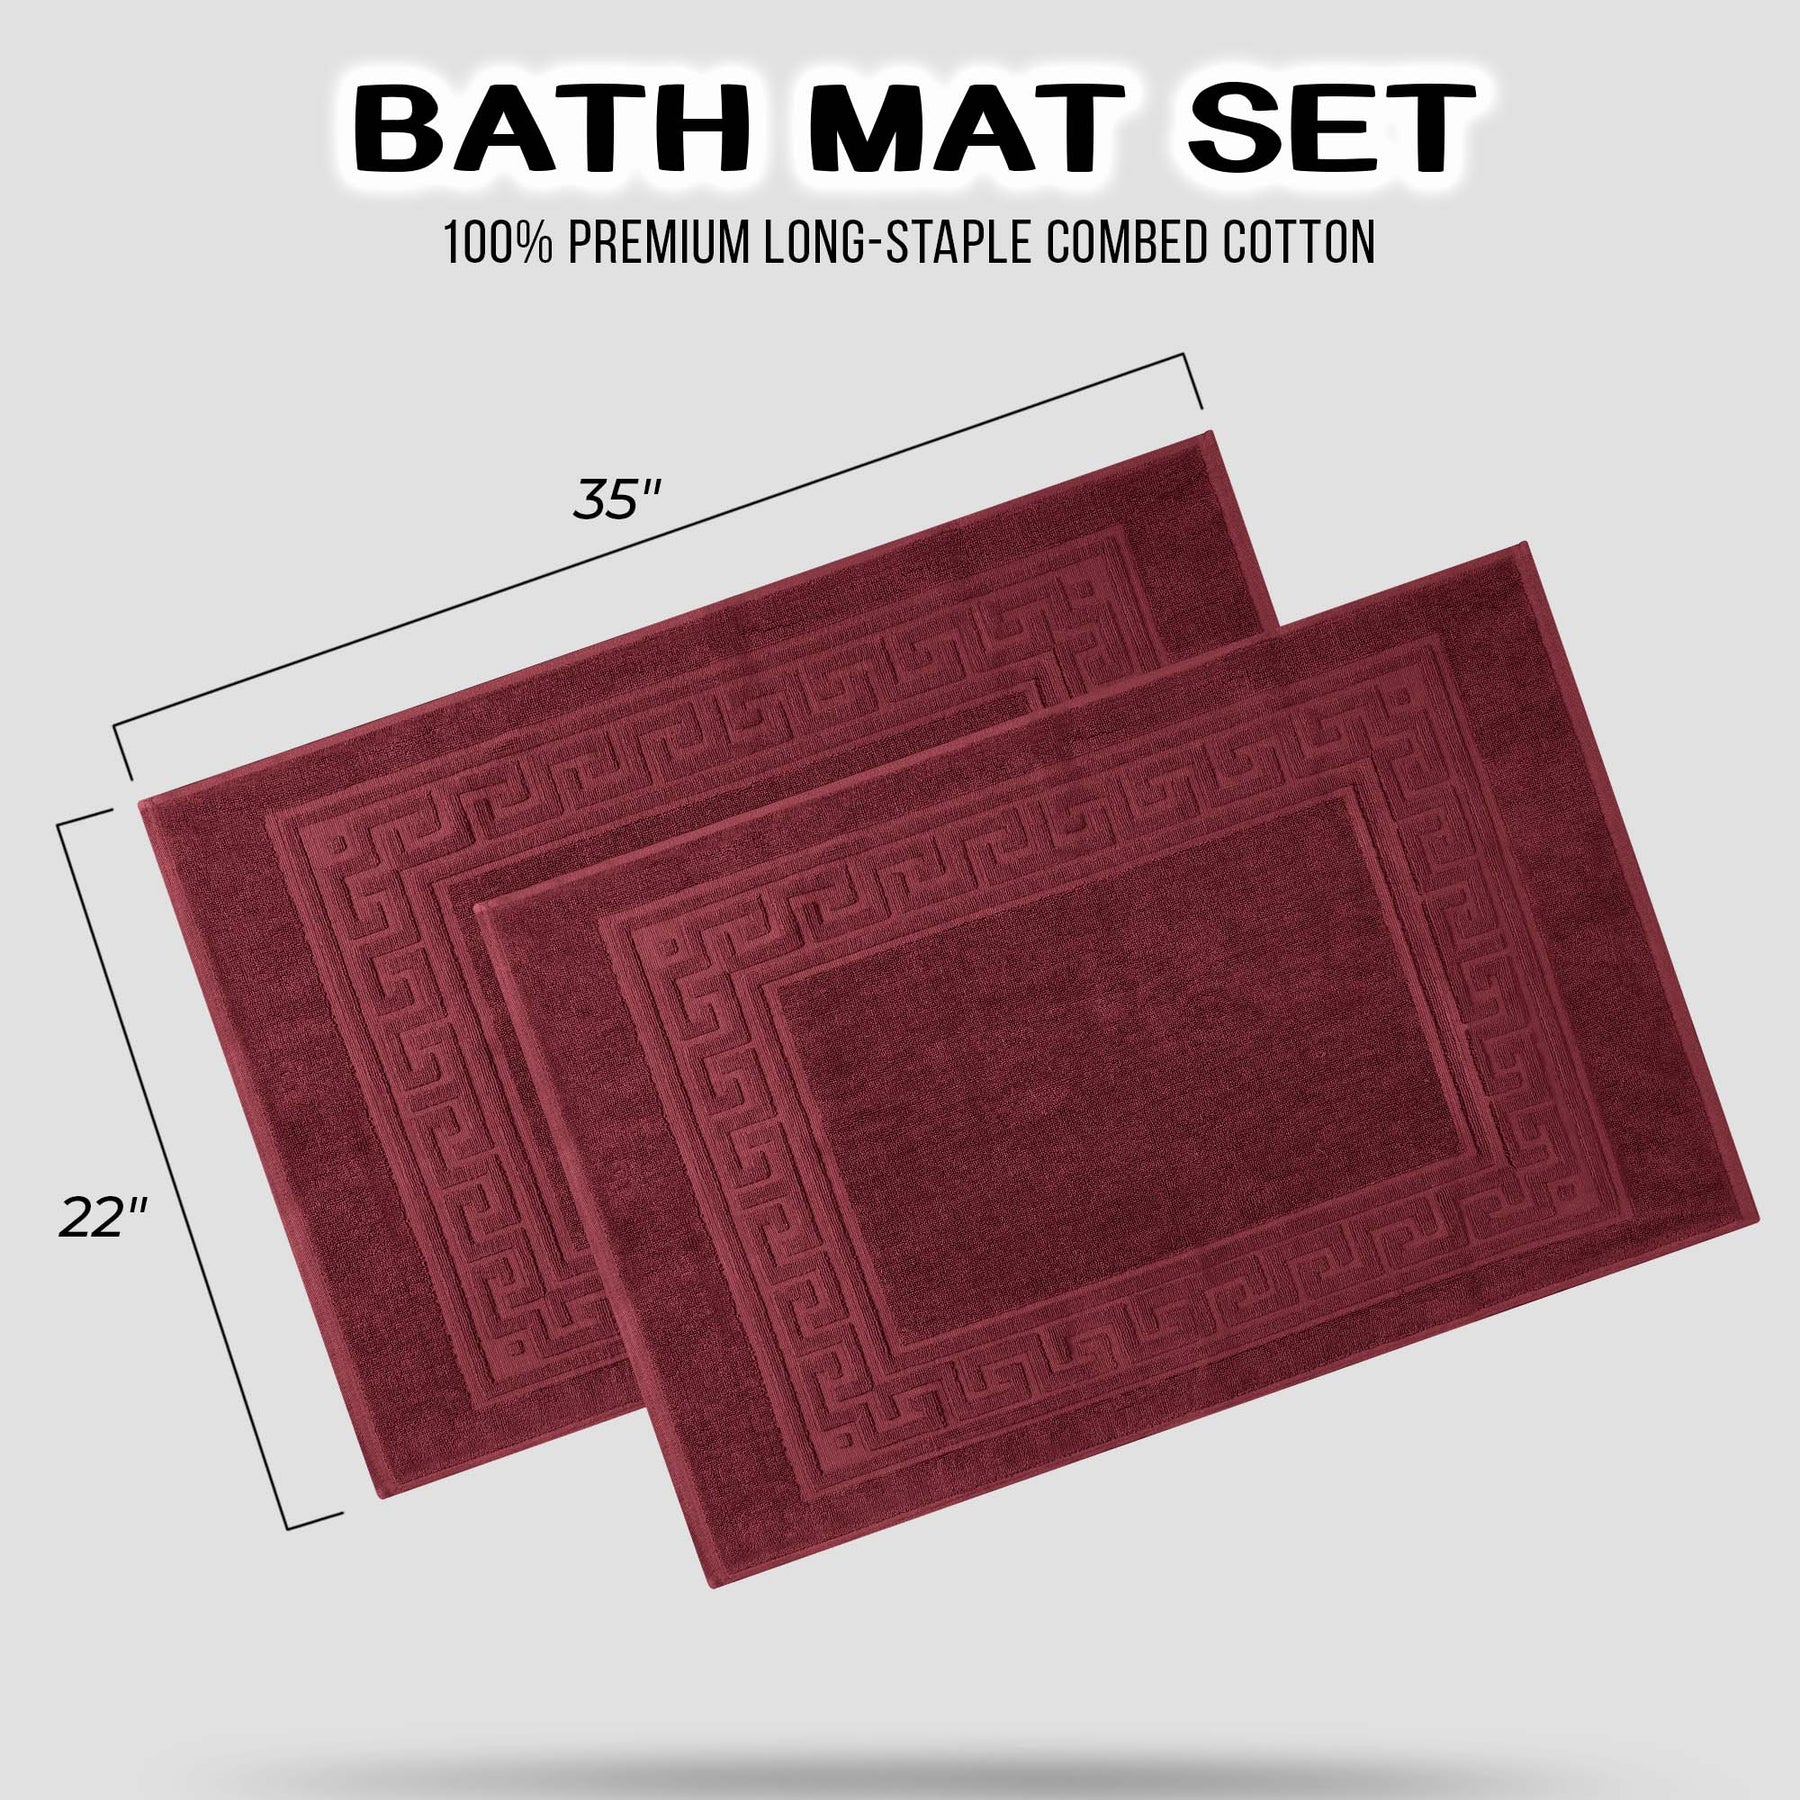 100% Cotton Highly-Absorbent Greek Key Border Solid 2-Piece Bath Mat Set - Burgundy